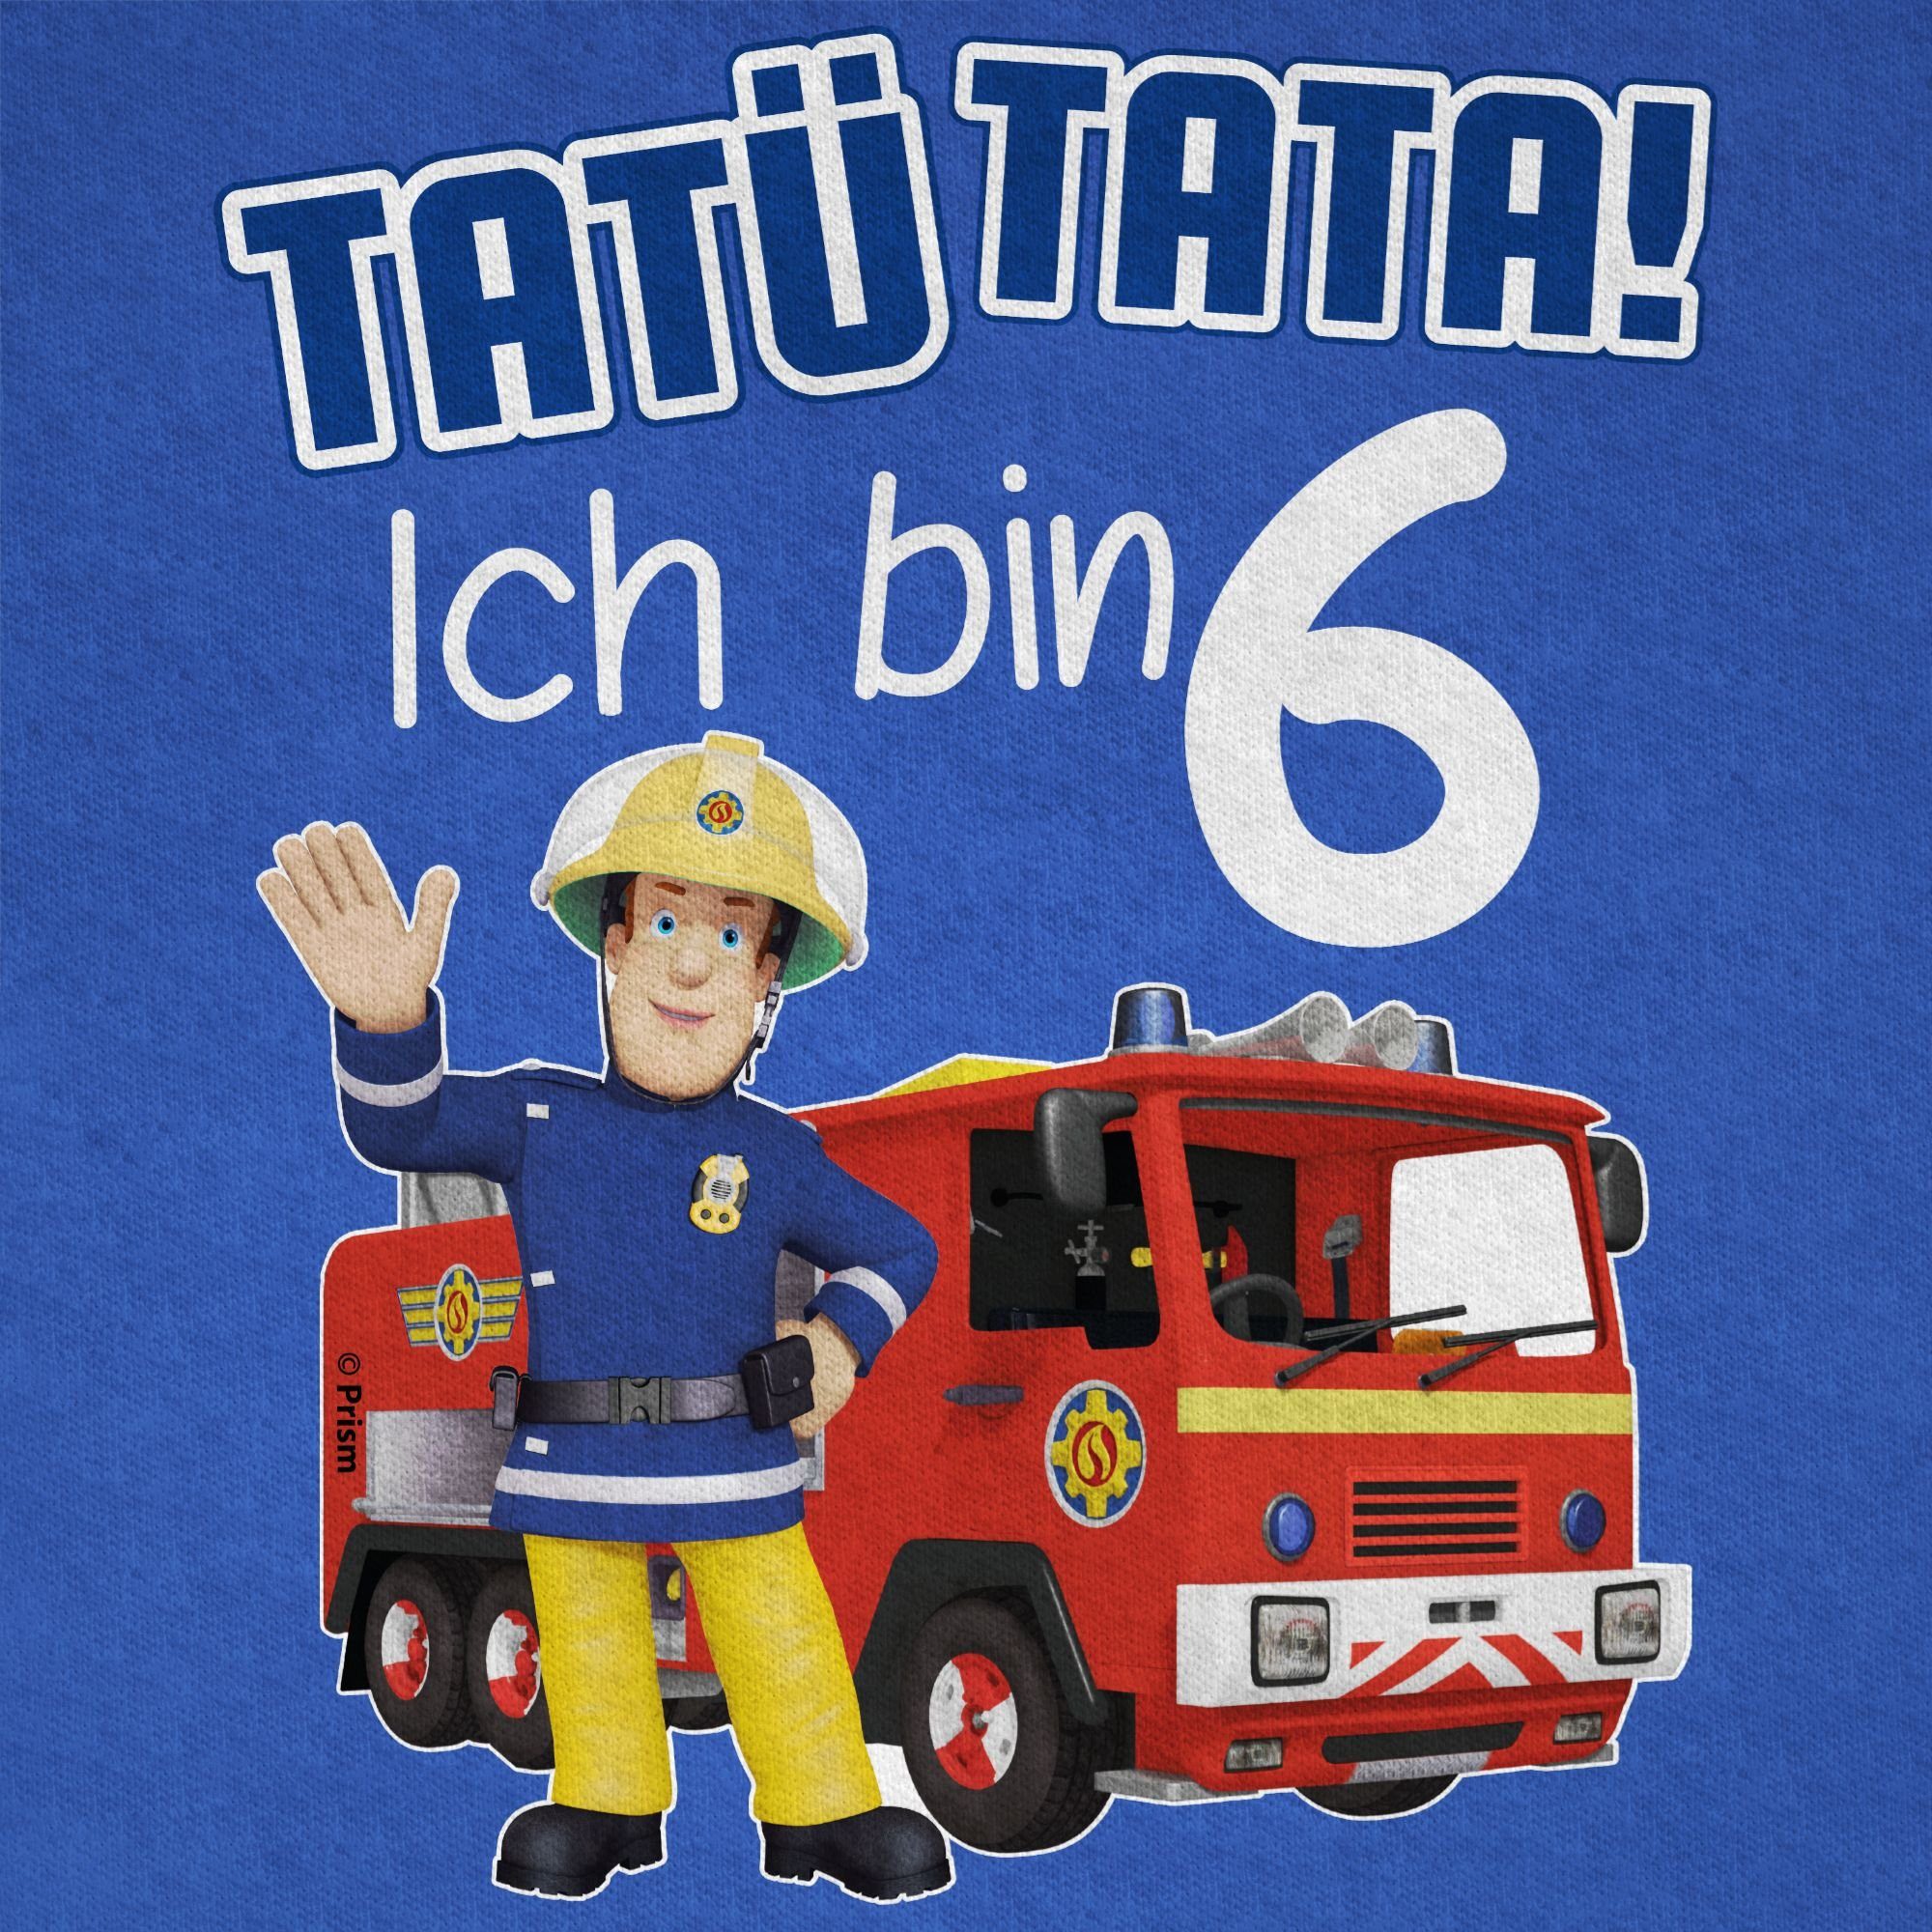 Tata! Shirtracer bin Sam - 01 Feuerwehrmann Tatü 6 Jungen Ich T-Shirt blau Royalblau